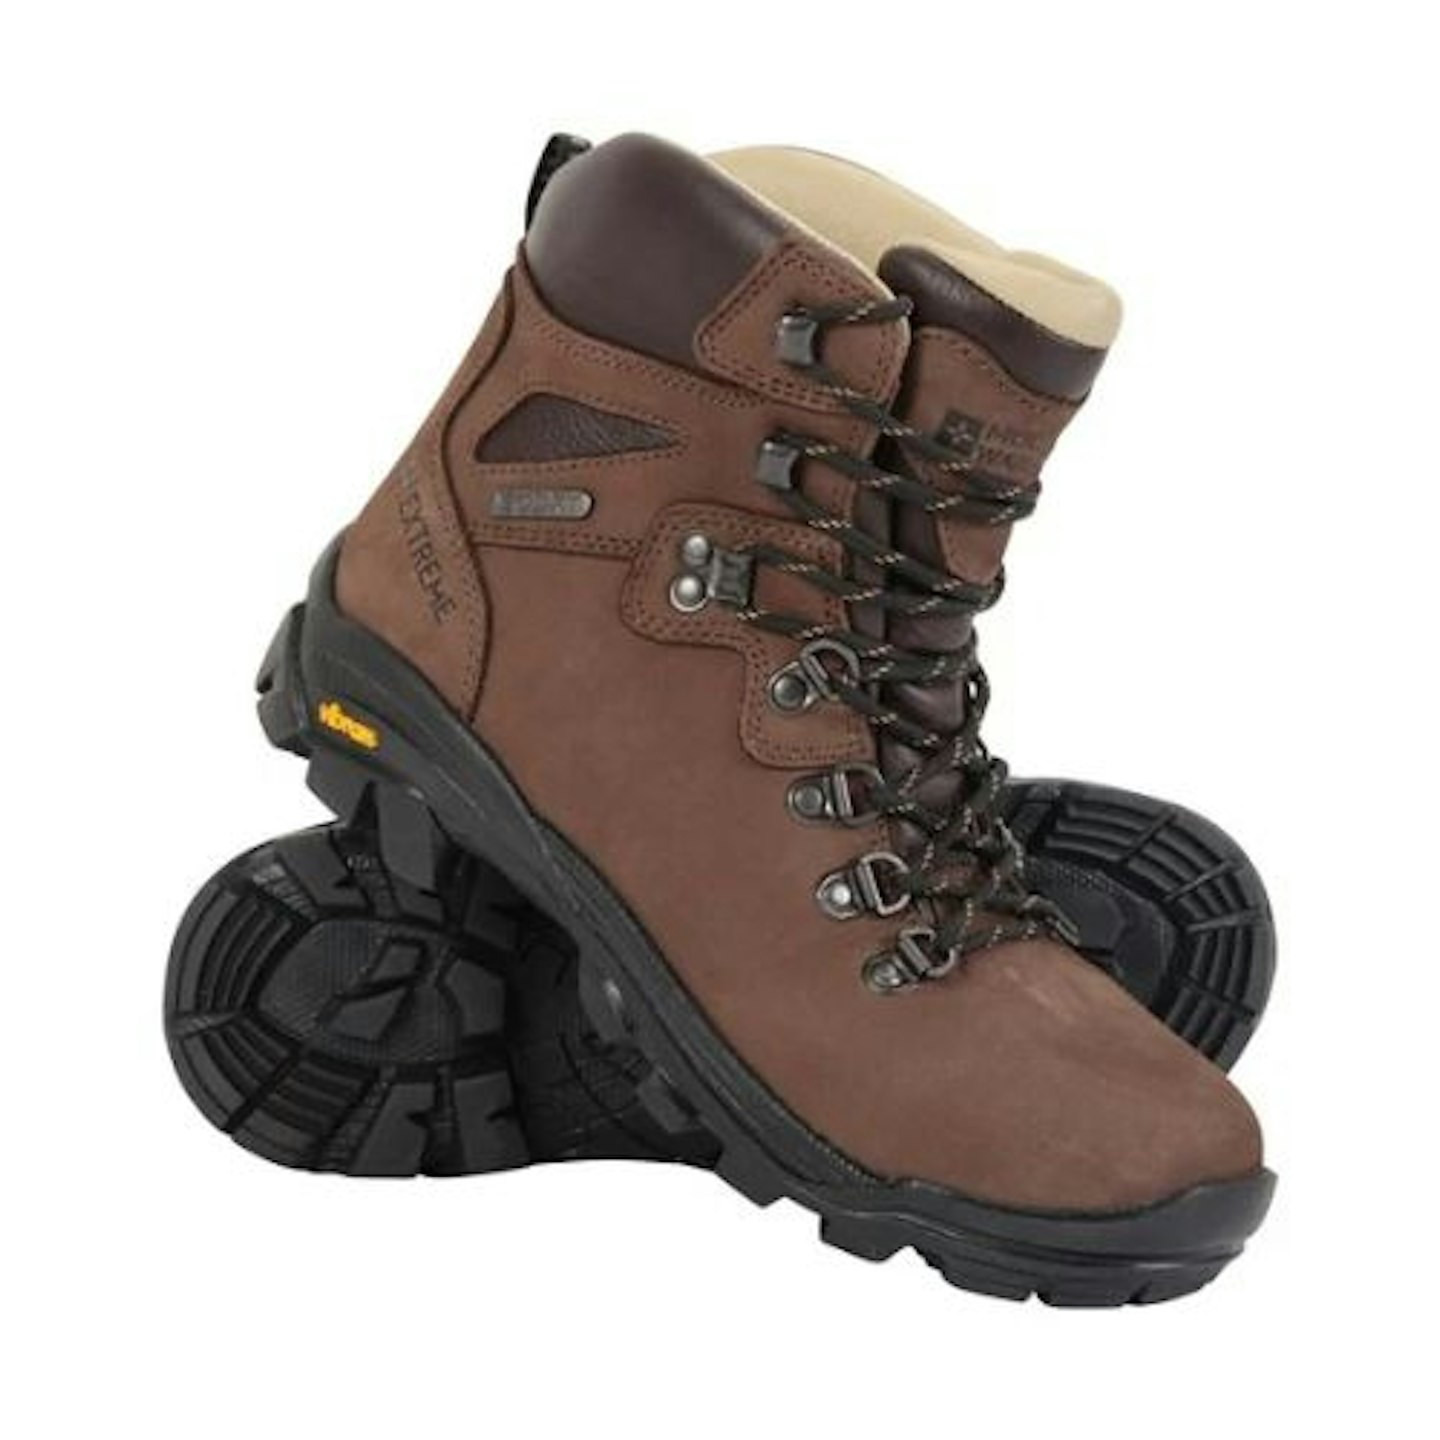 Odyssey Extreme Men’s Vibram Waterproof Hiking Boots